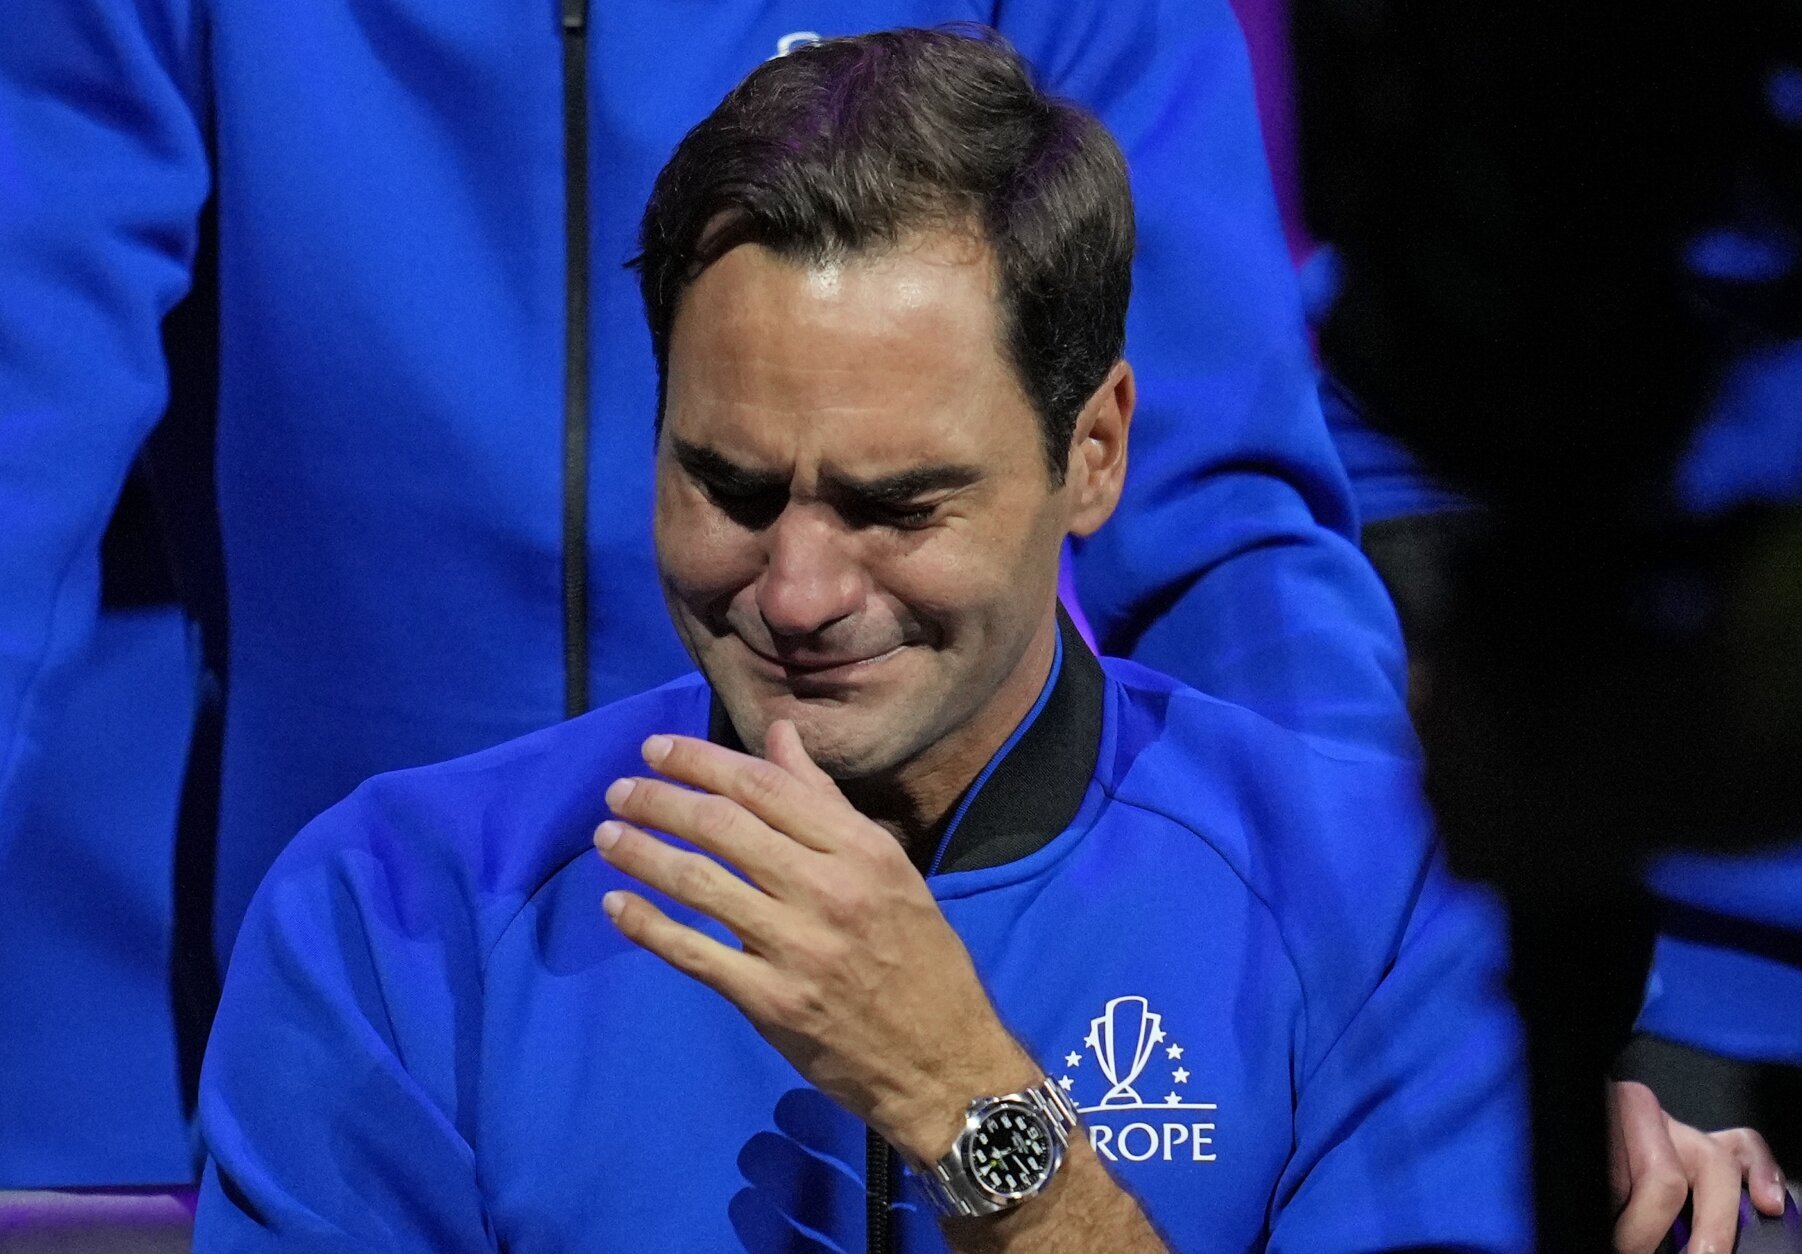 Roger Federer retires after teaming with Nadal in last match